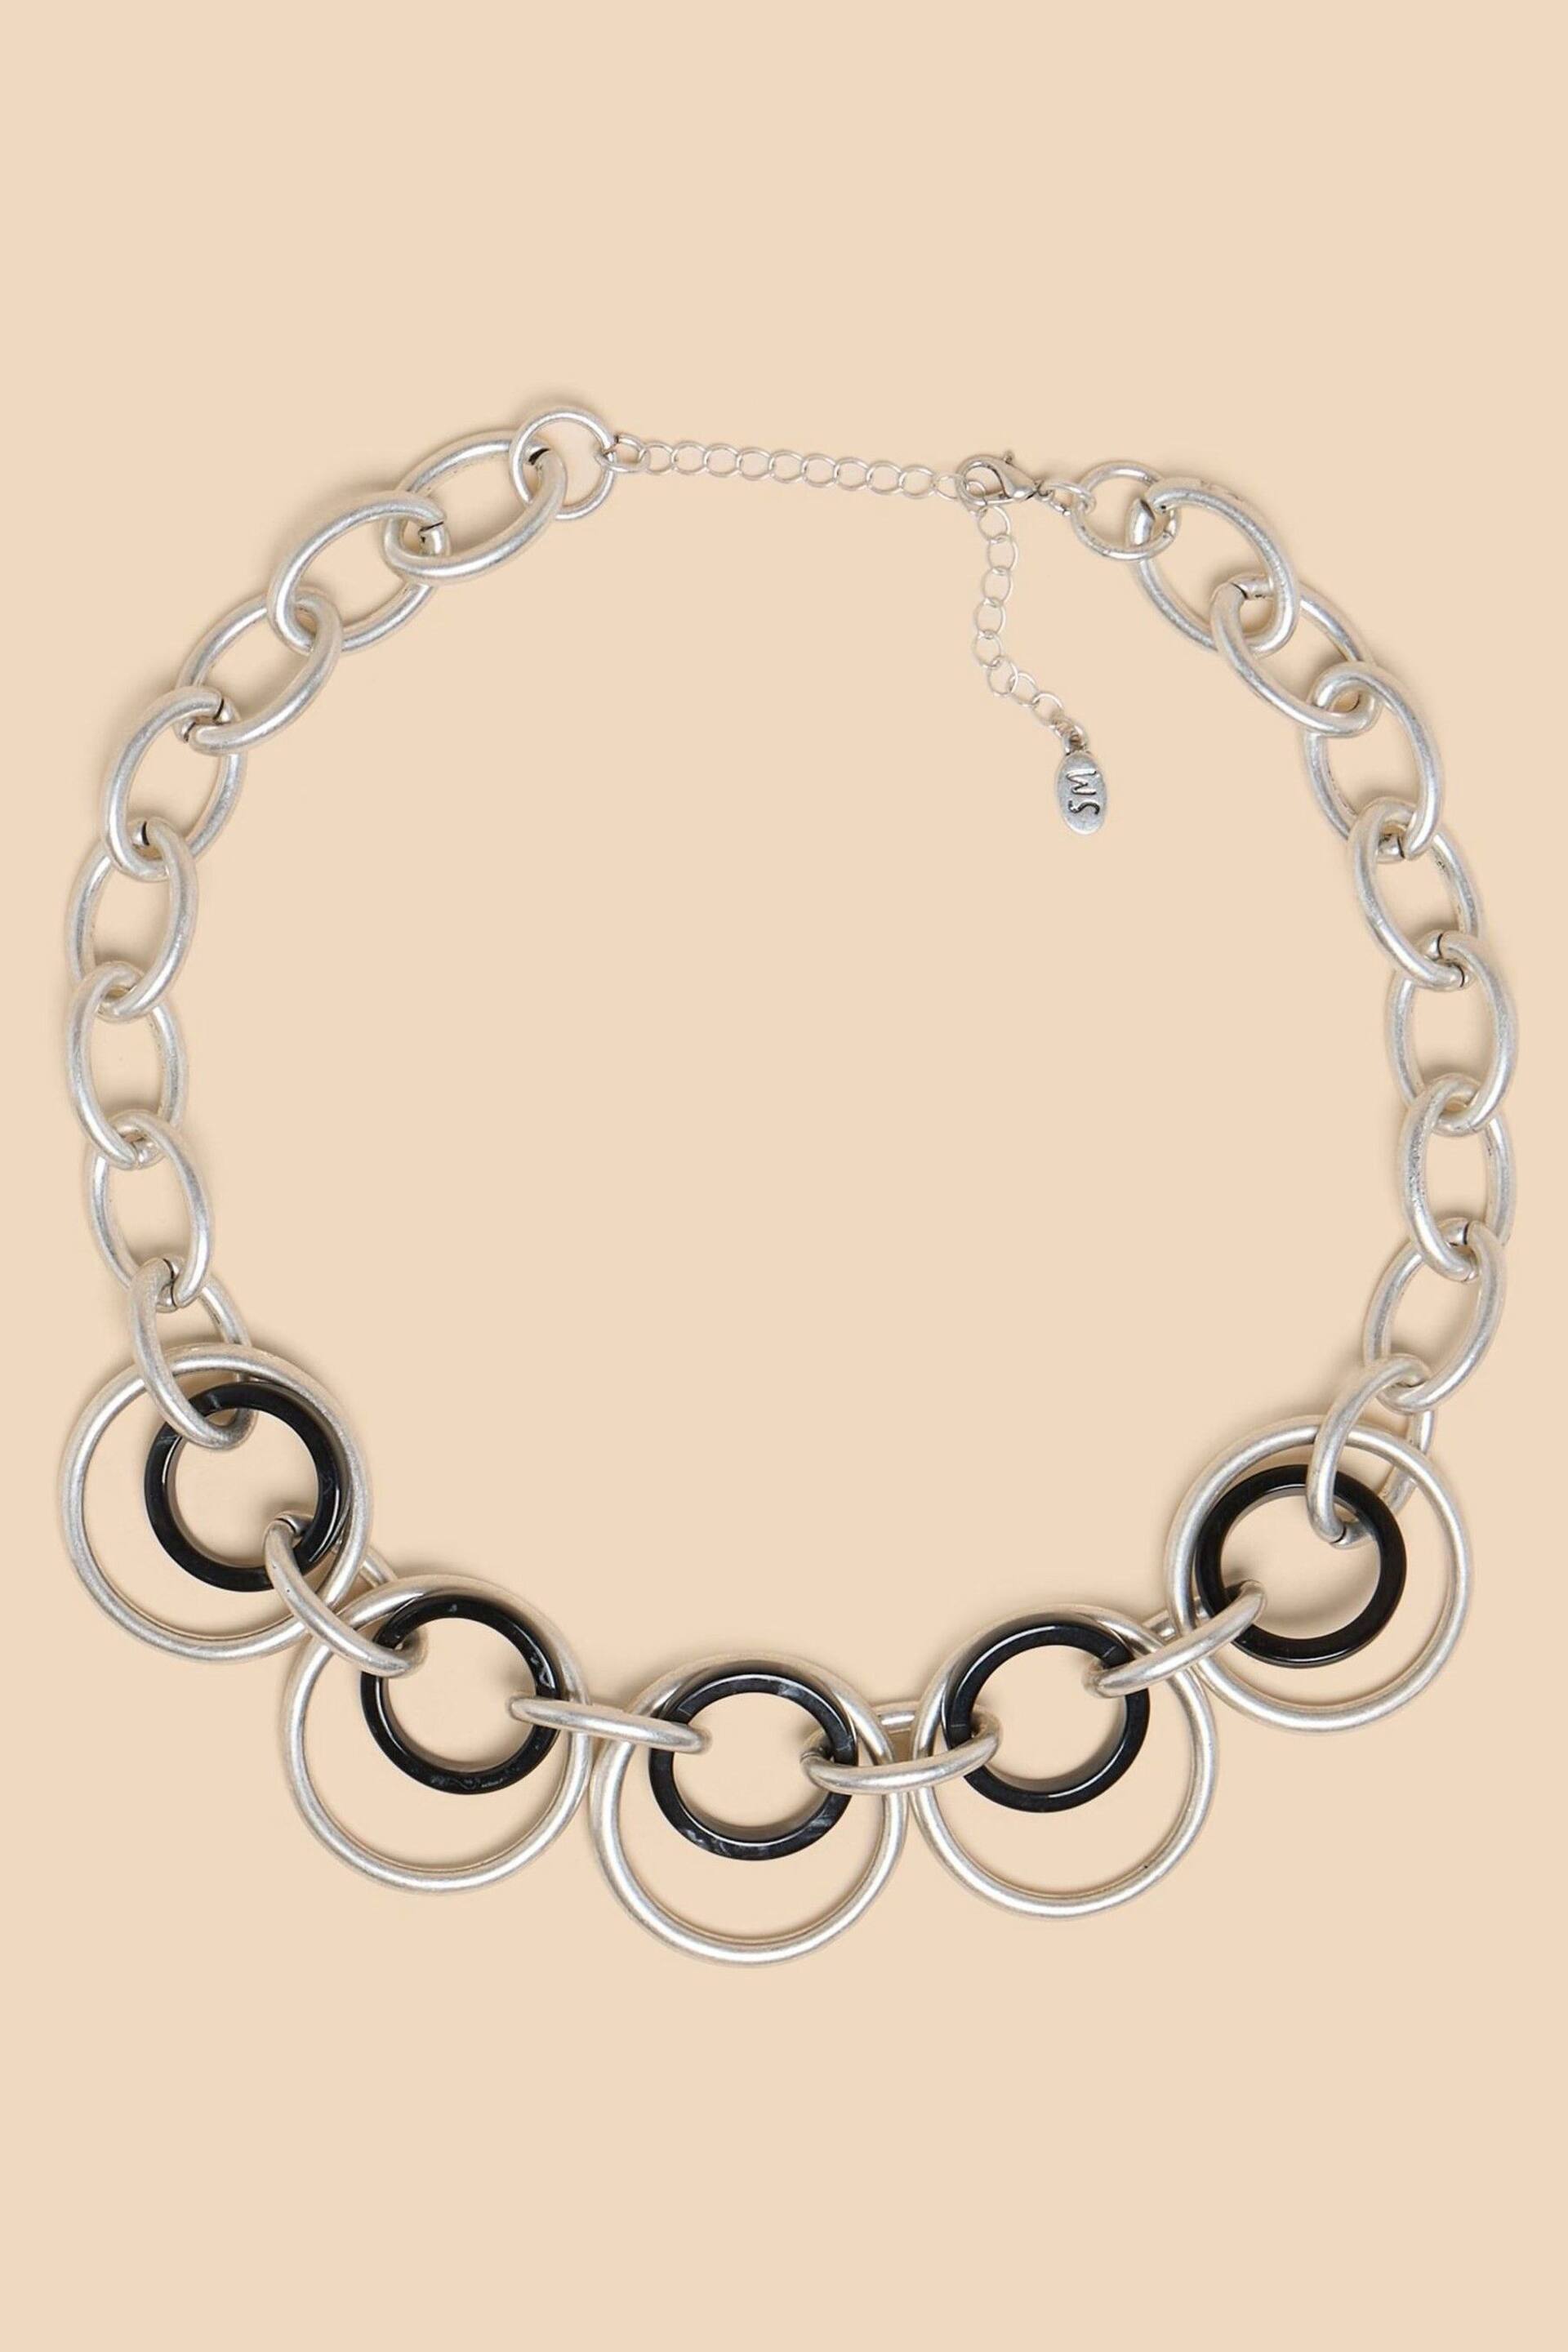 White Stuff Silver Tone Yara Circular Link Necklace - Image 1 of 2